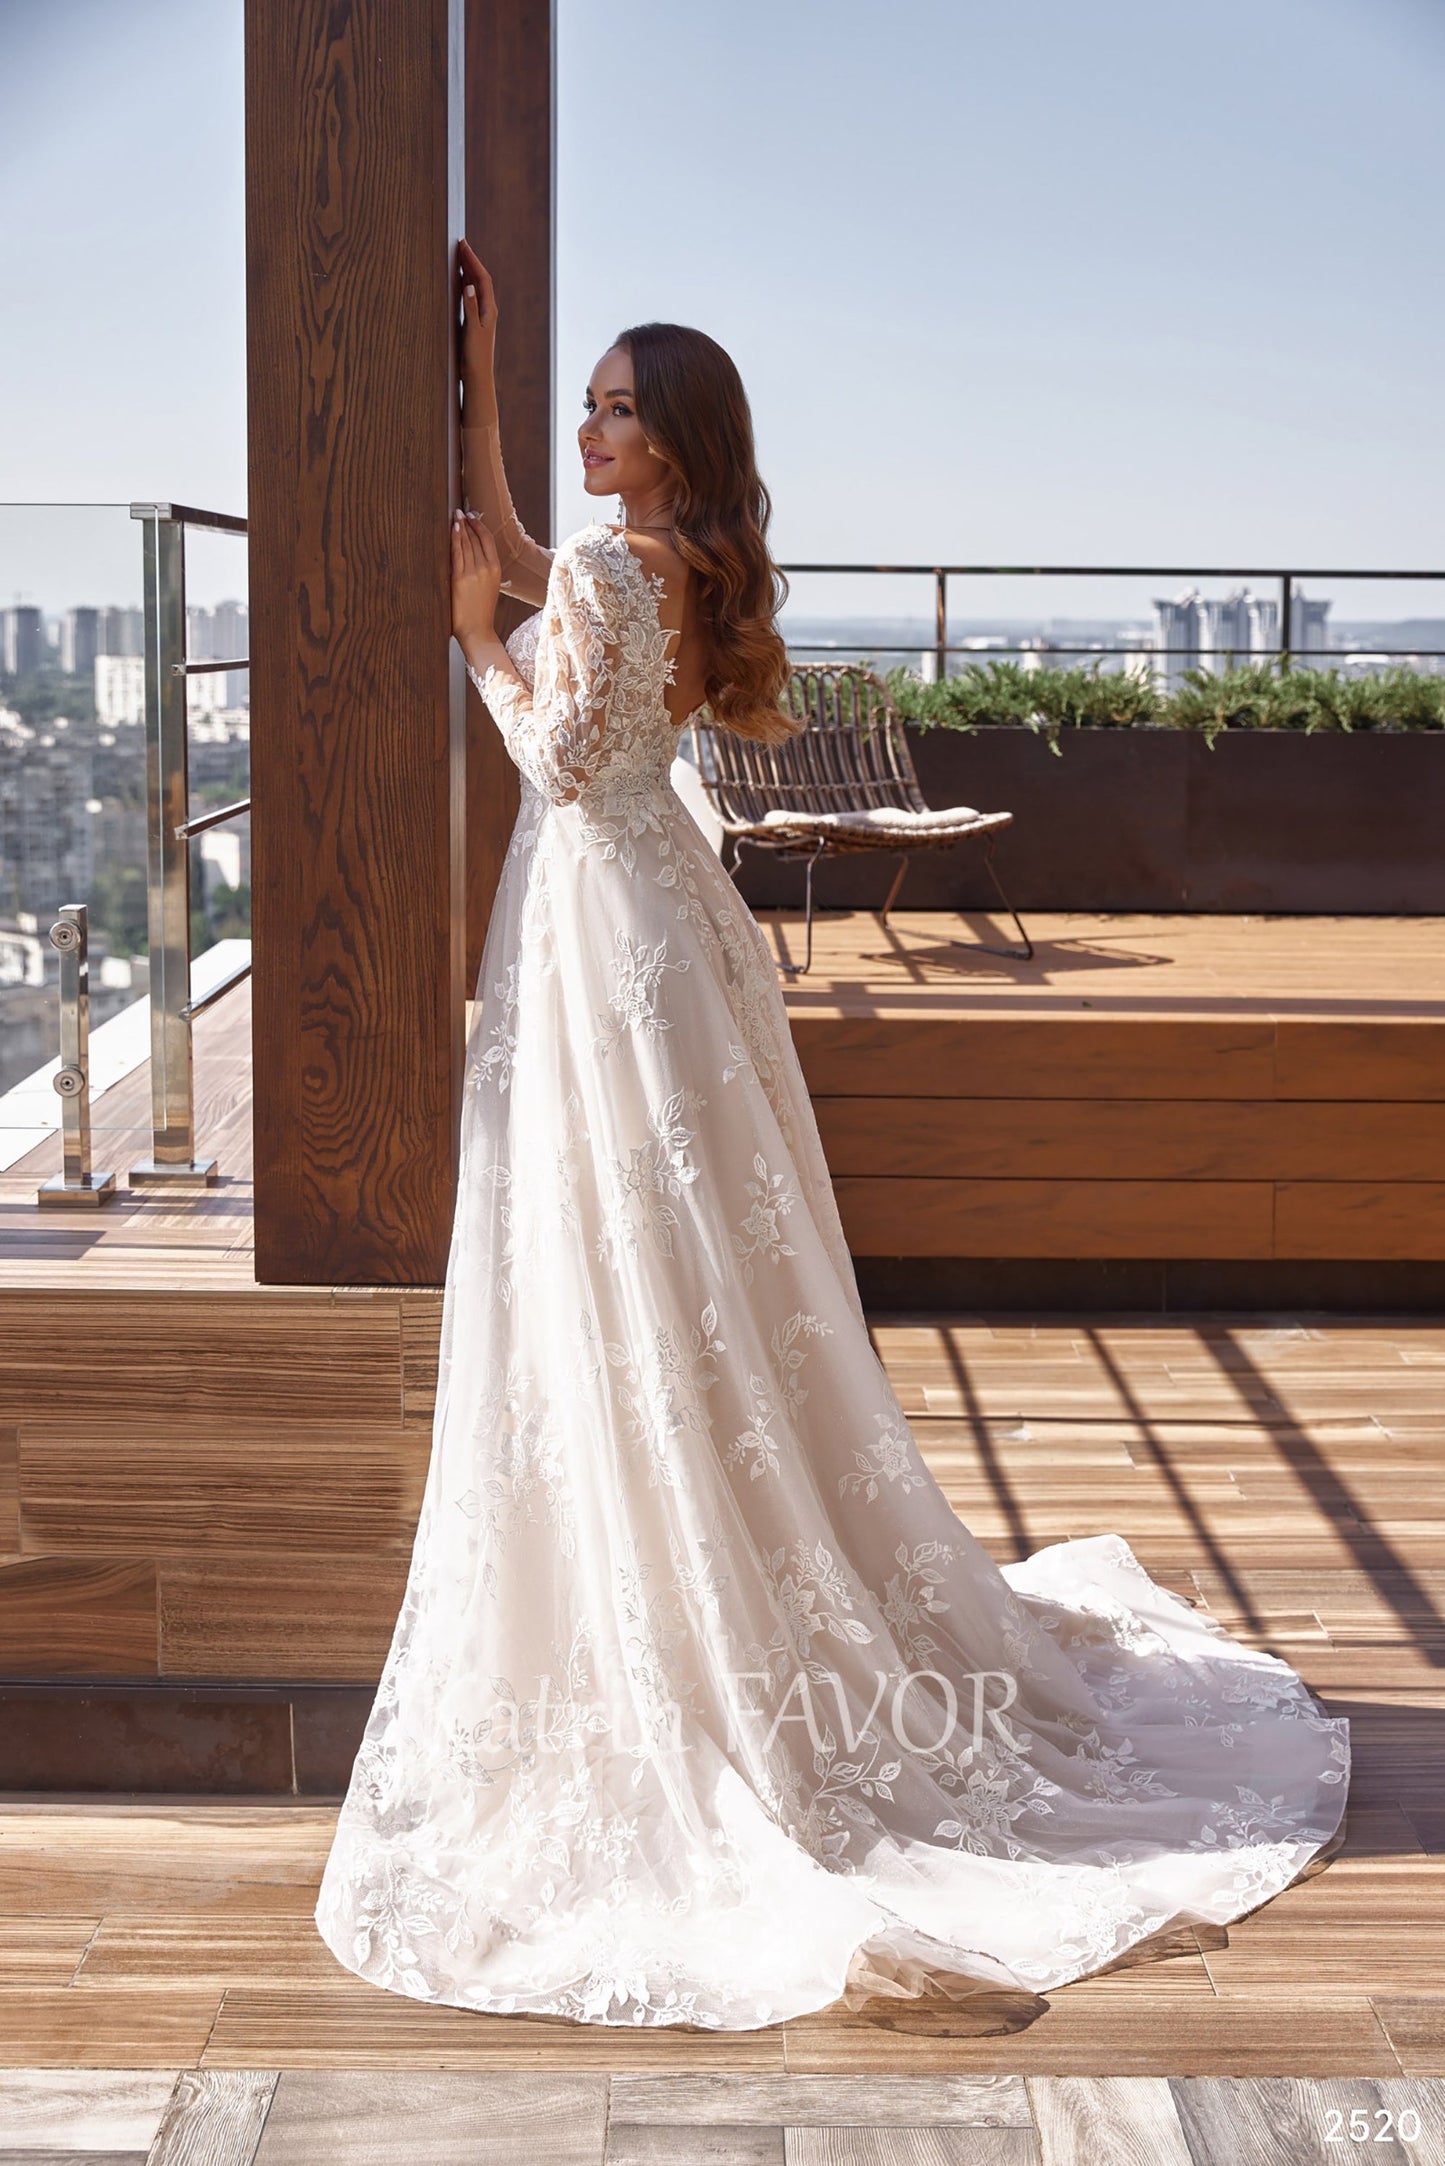 KatrinFAVORboutique-Floral lace long sleeve wedding dress